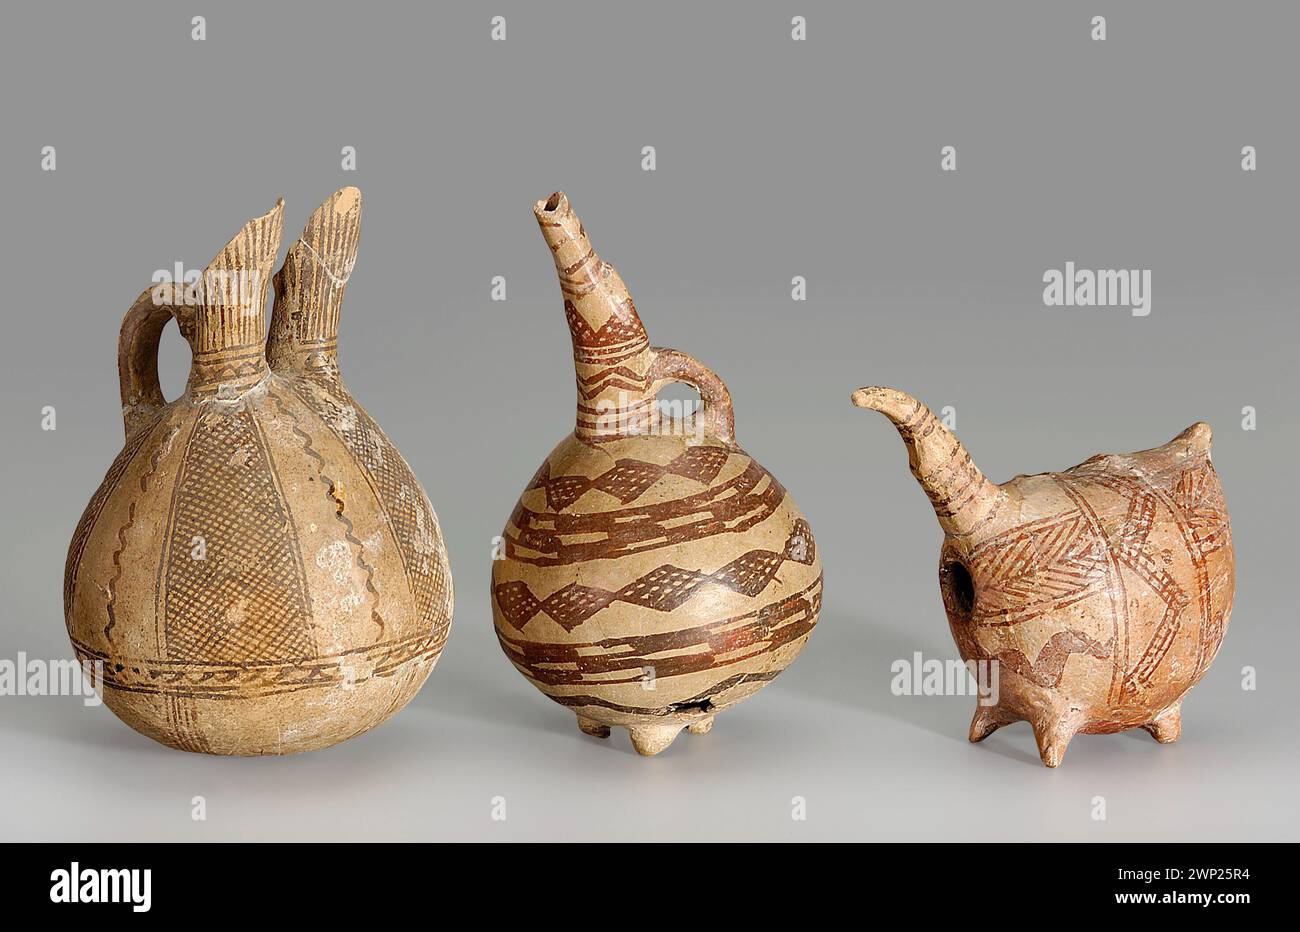 Caraffa, caraffa, piatto sotto forma di animale; laboratorio cipriota sconosciuto, 1900-1650 a.C. (-1900-00-00--1650-00-00), 1900-1700 a.C. (-1900-00-00--00--1700-00-00), 1900-1600 a.C. (-1900-00-00--1600-00-00);raccolta Cesnoli, Cipro, Działyńska, Izabela (1830-1899), Działyński, Jan (1829-1880) Foto Stock